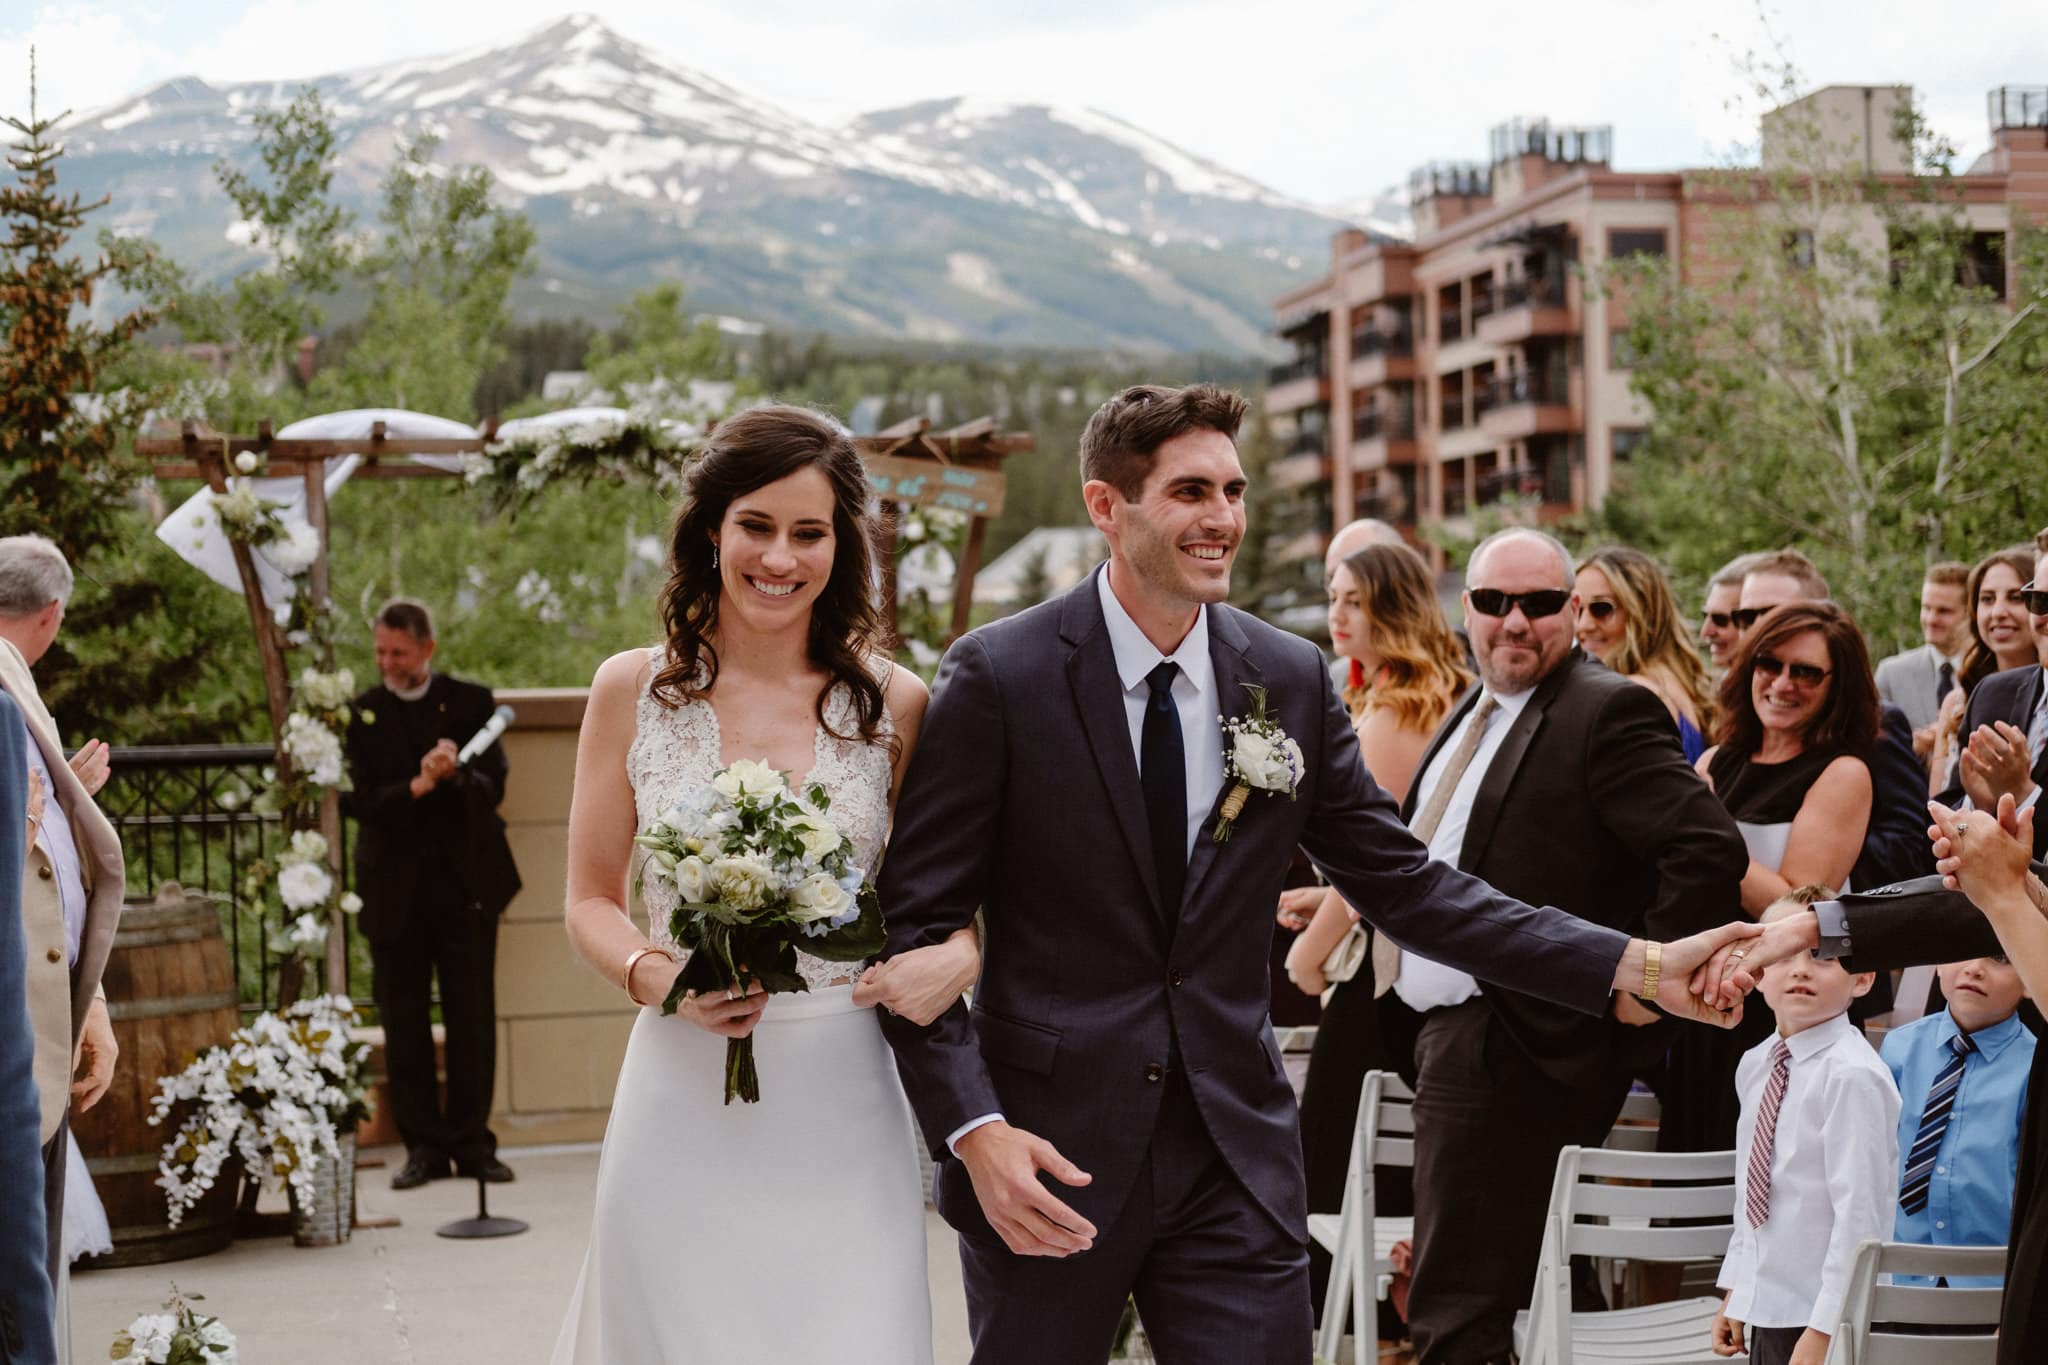 Main Street Station wedding ceremony, Breckenridge Colorado ski resort wedding photographer